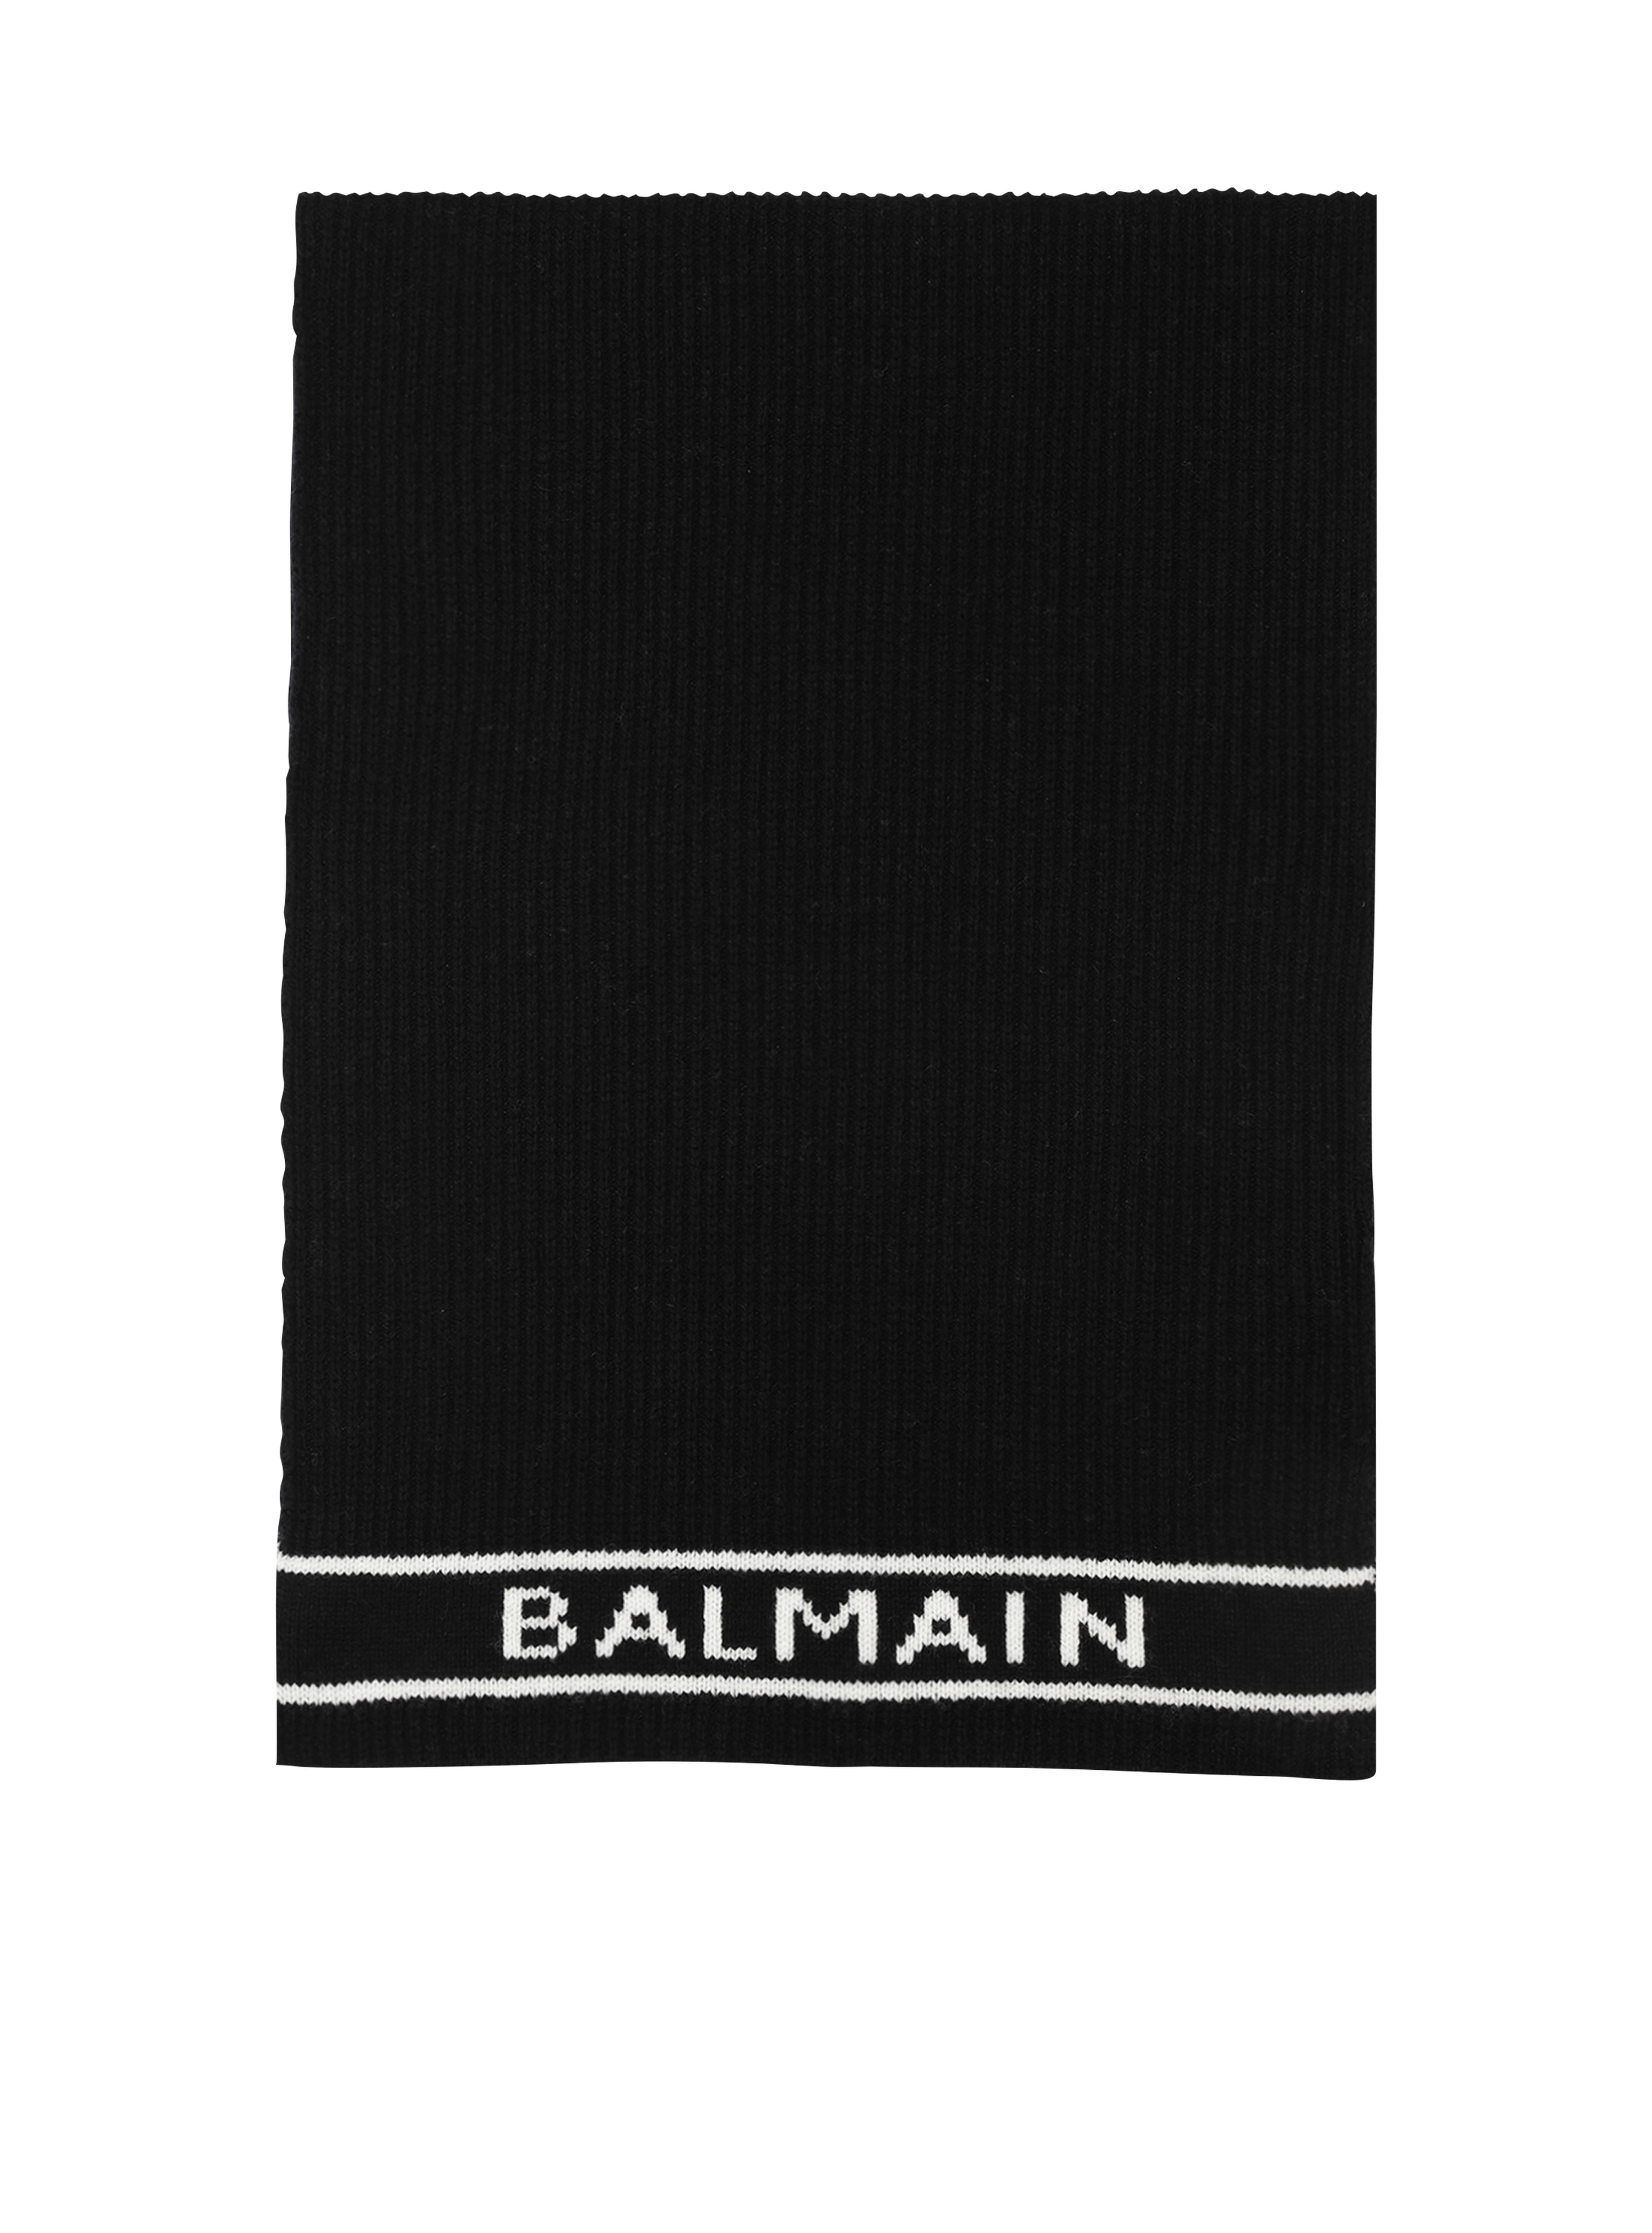 Wool scarf with Balmain logo, black